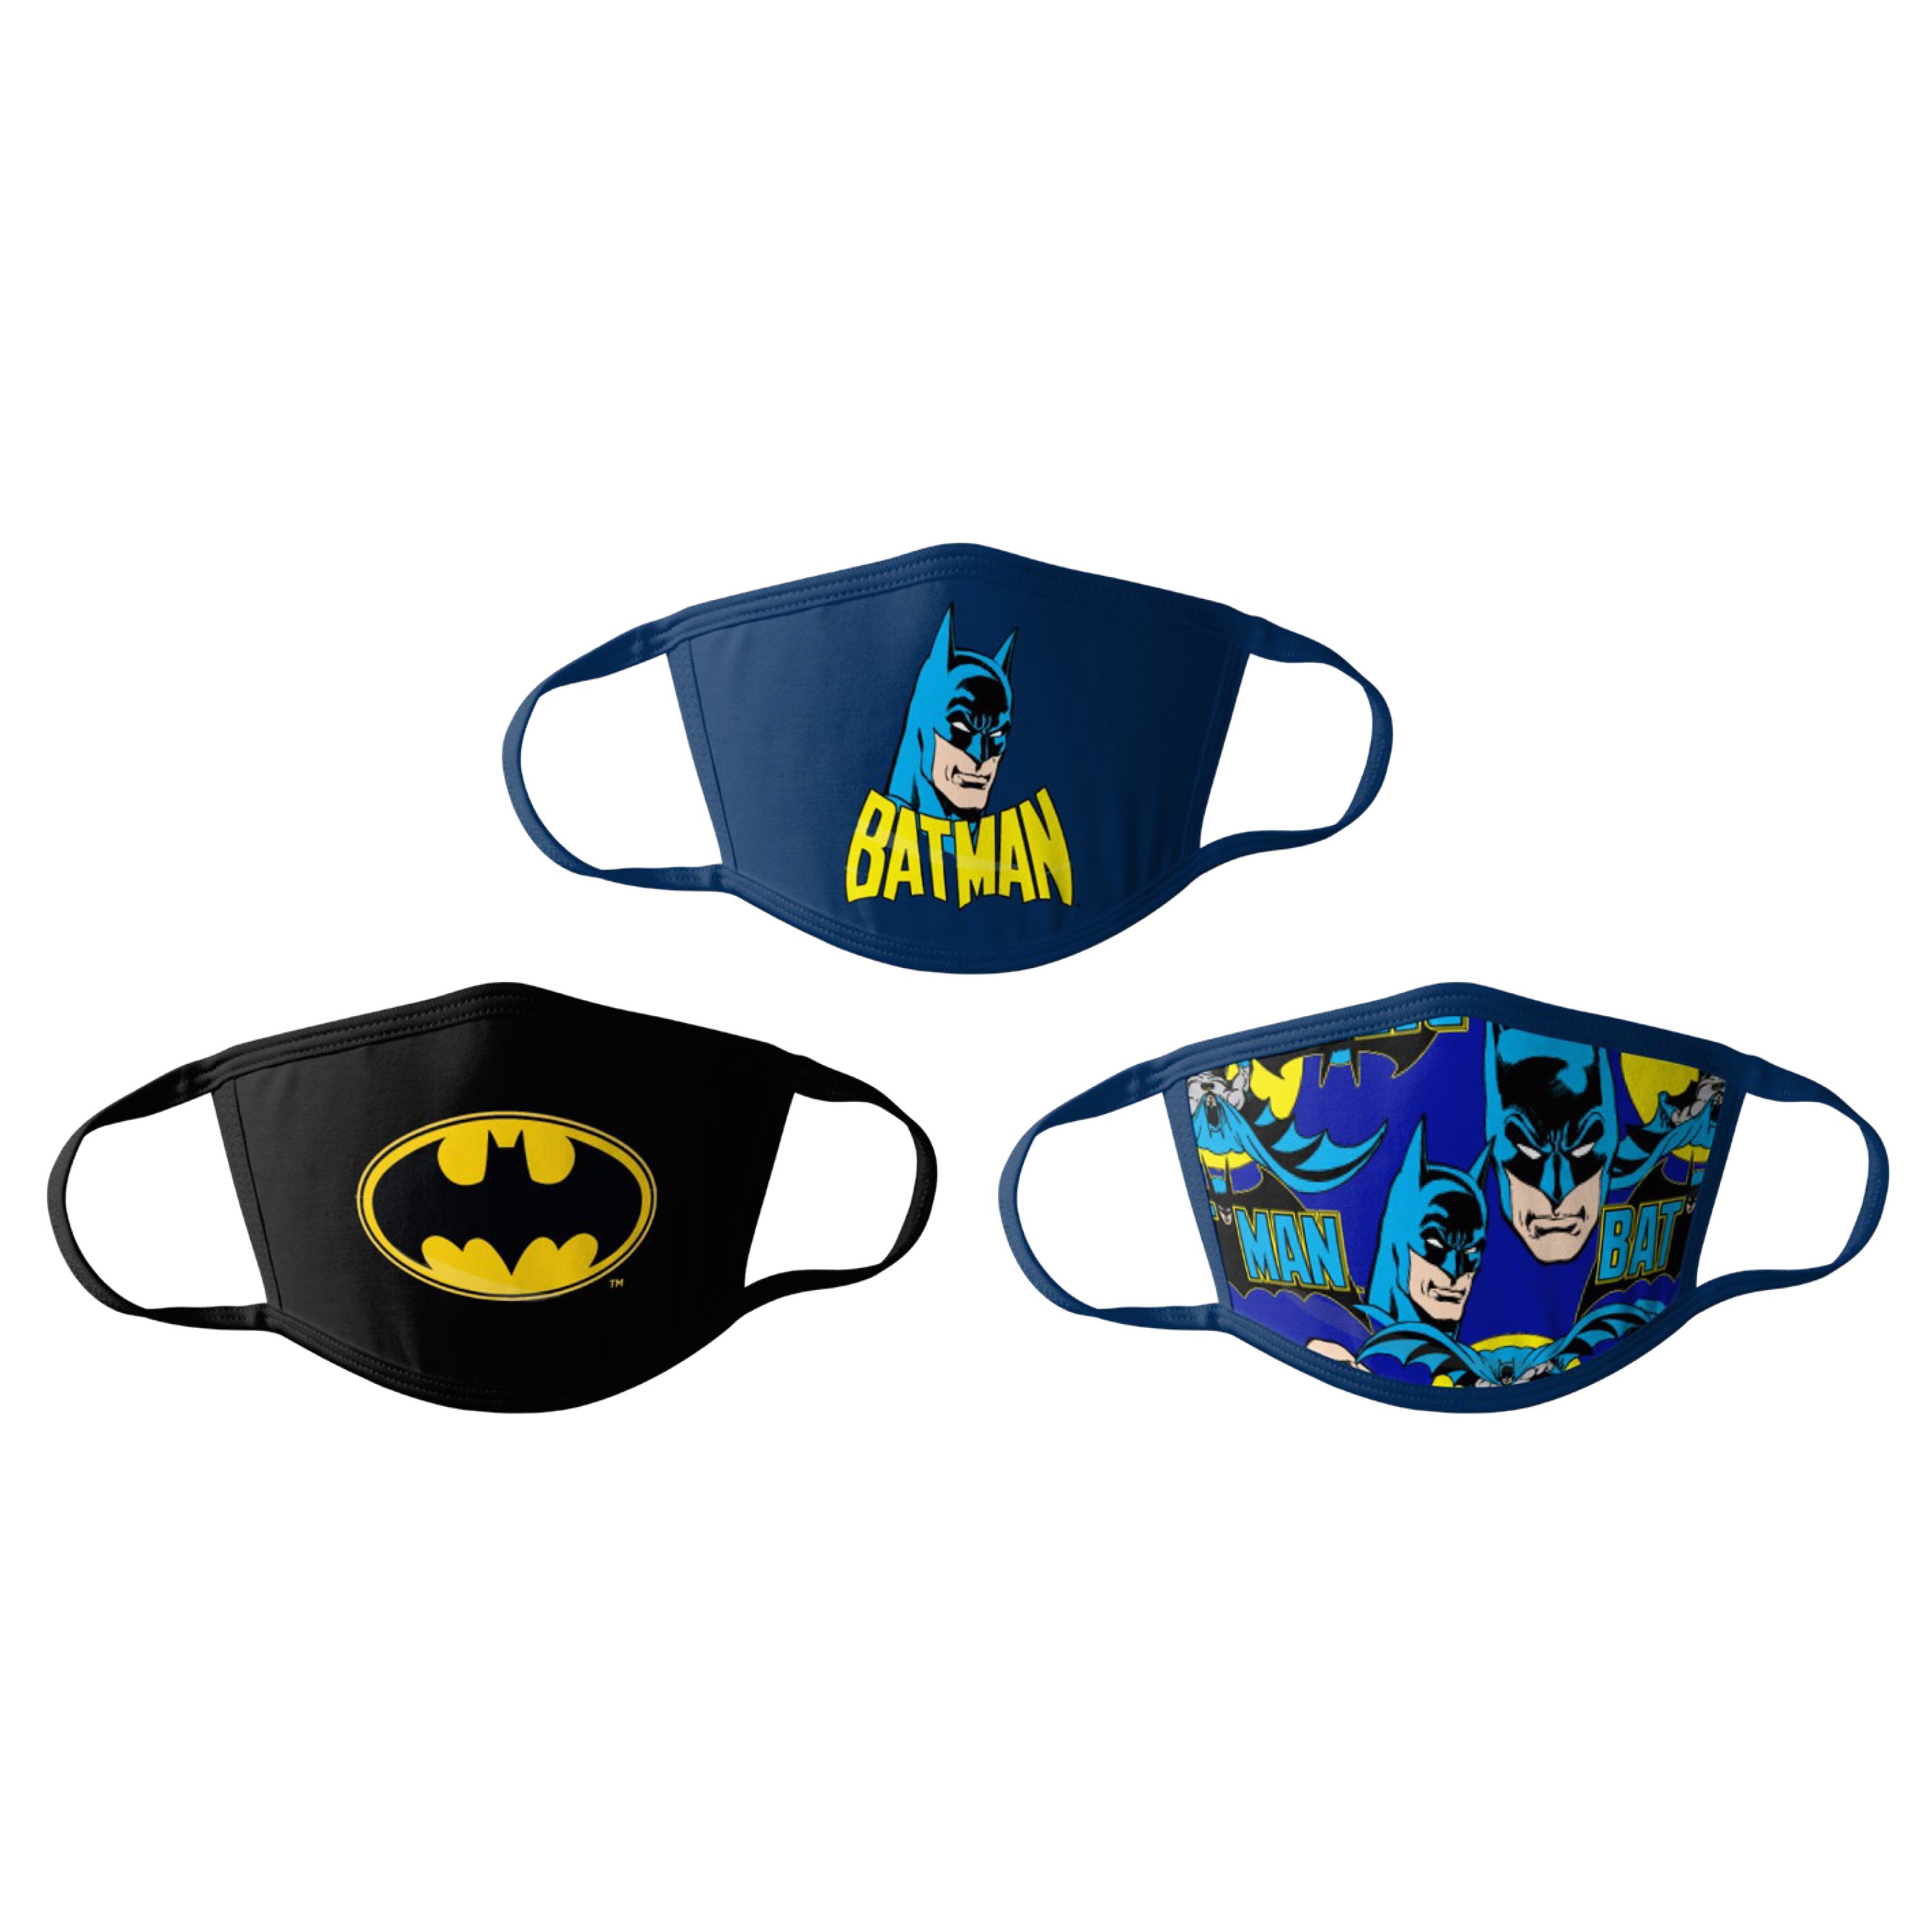 Kids Cloth Face Masks Paw Patrol Jojo Siwa Batman and More 3 Pack Washable  | eBay